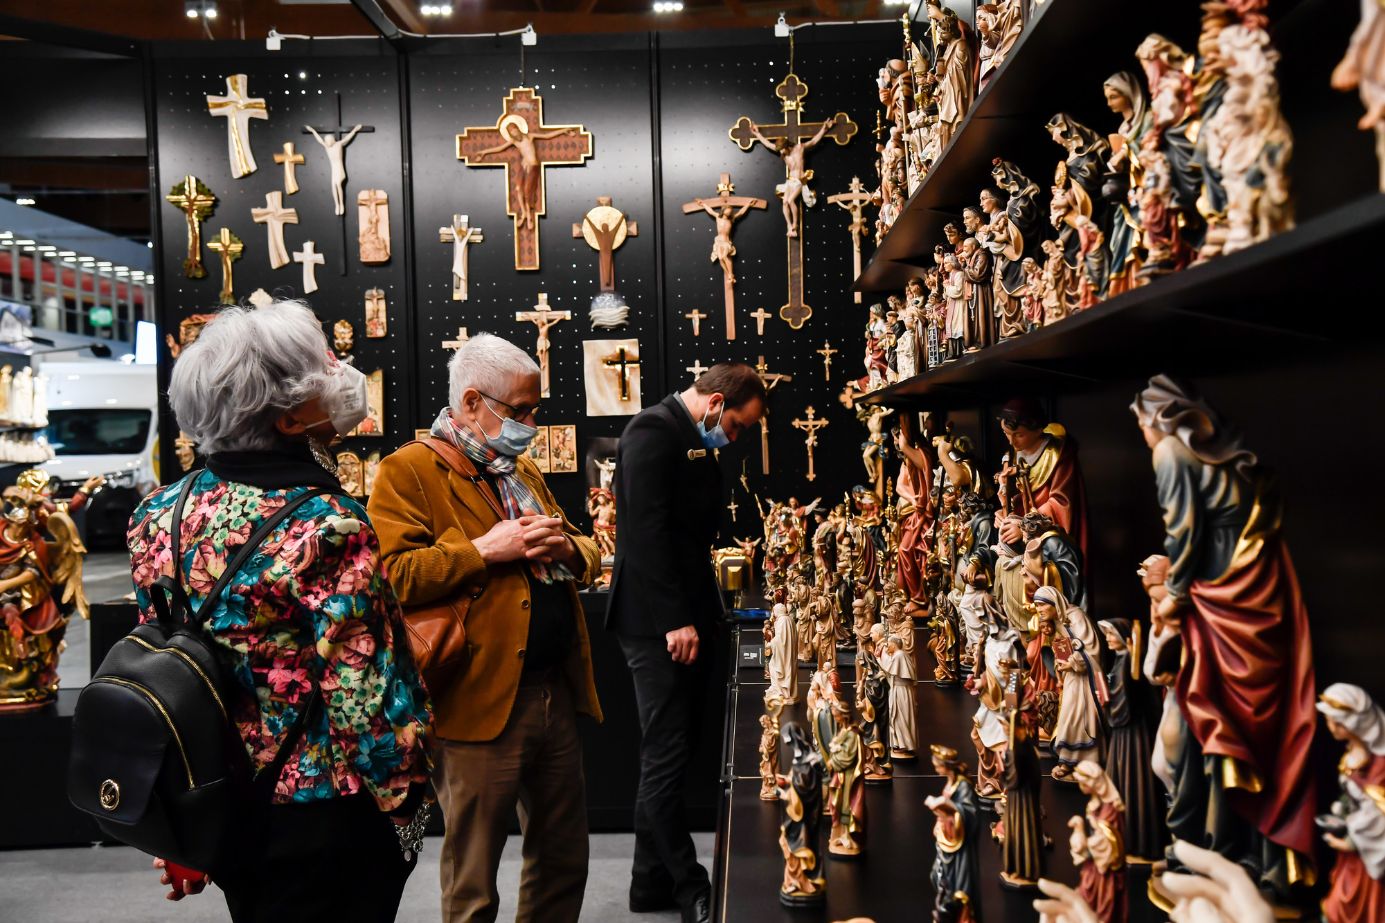 Egypt Showcases Holy Family Trail in International Religious Exhibit